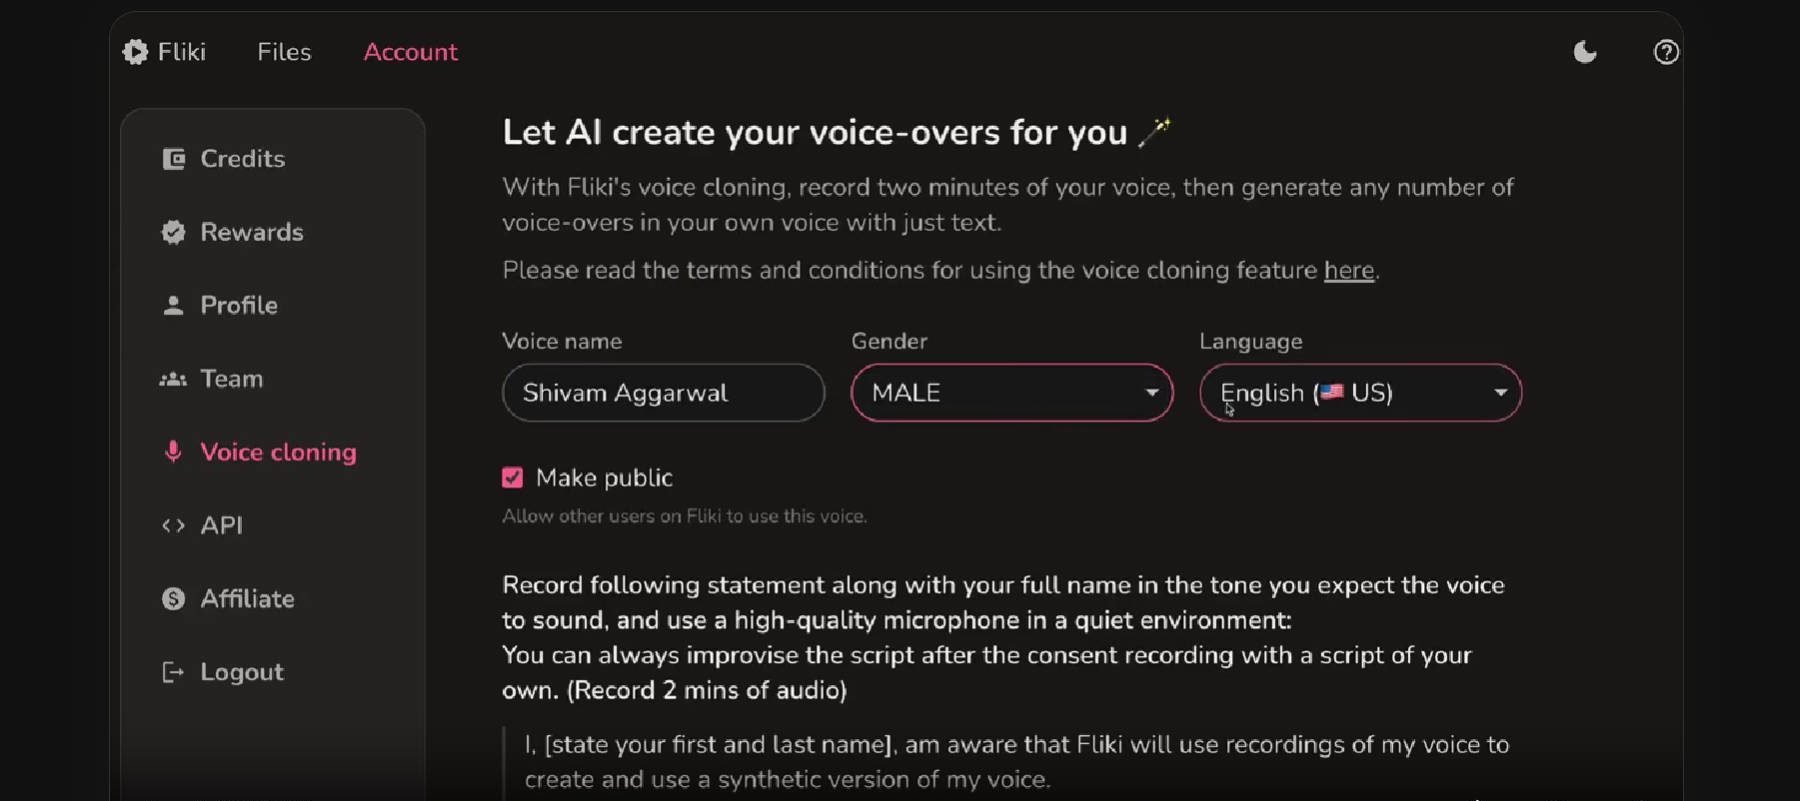 Fliki AI Voice Cloning Screenshot